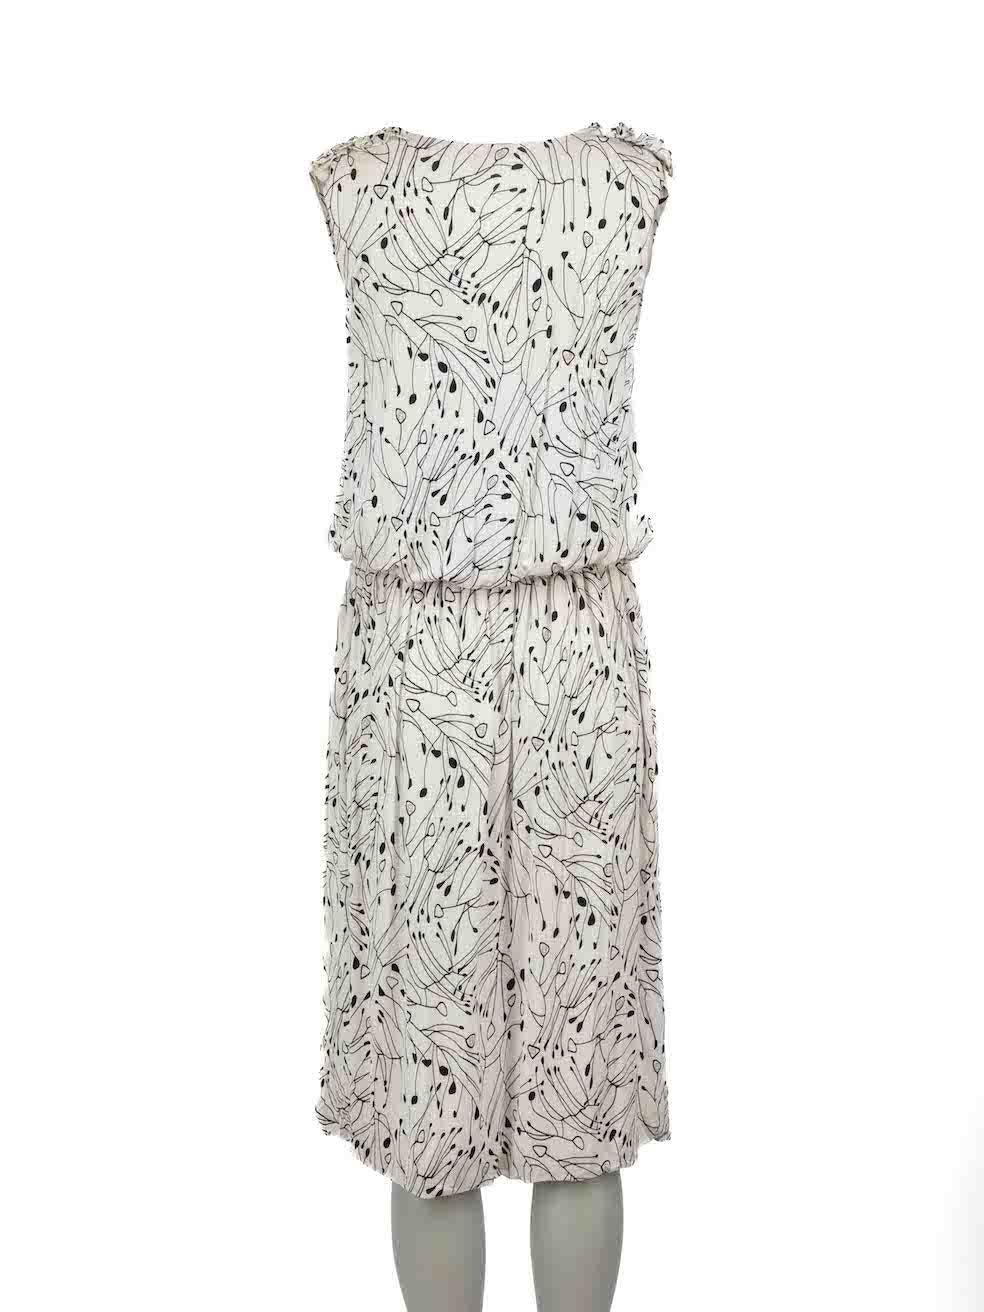 Fendi White Printed Fine Knit Midi Dress Size S In Excellent Condition For Sale In London, GB